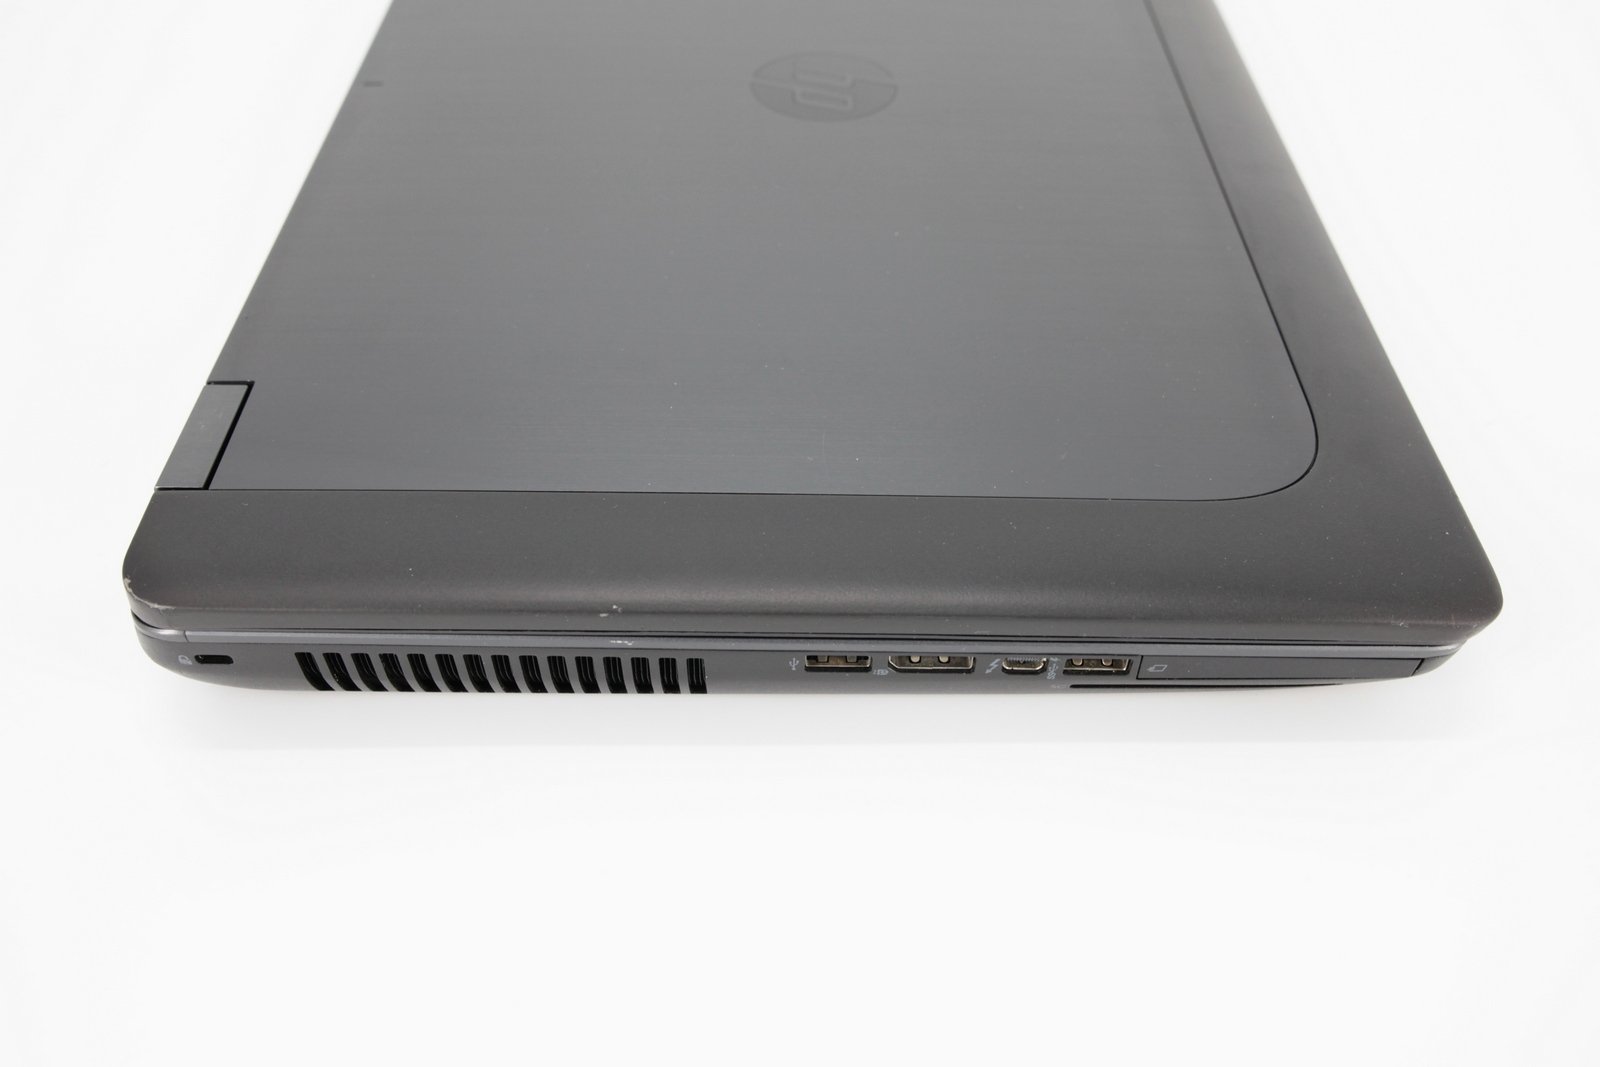 HP ZBook 17 CAD Laptop: Core i7-4800MQ, 16GB RAM, 256GB+HDD, Quadro K4100M - CruiseTech